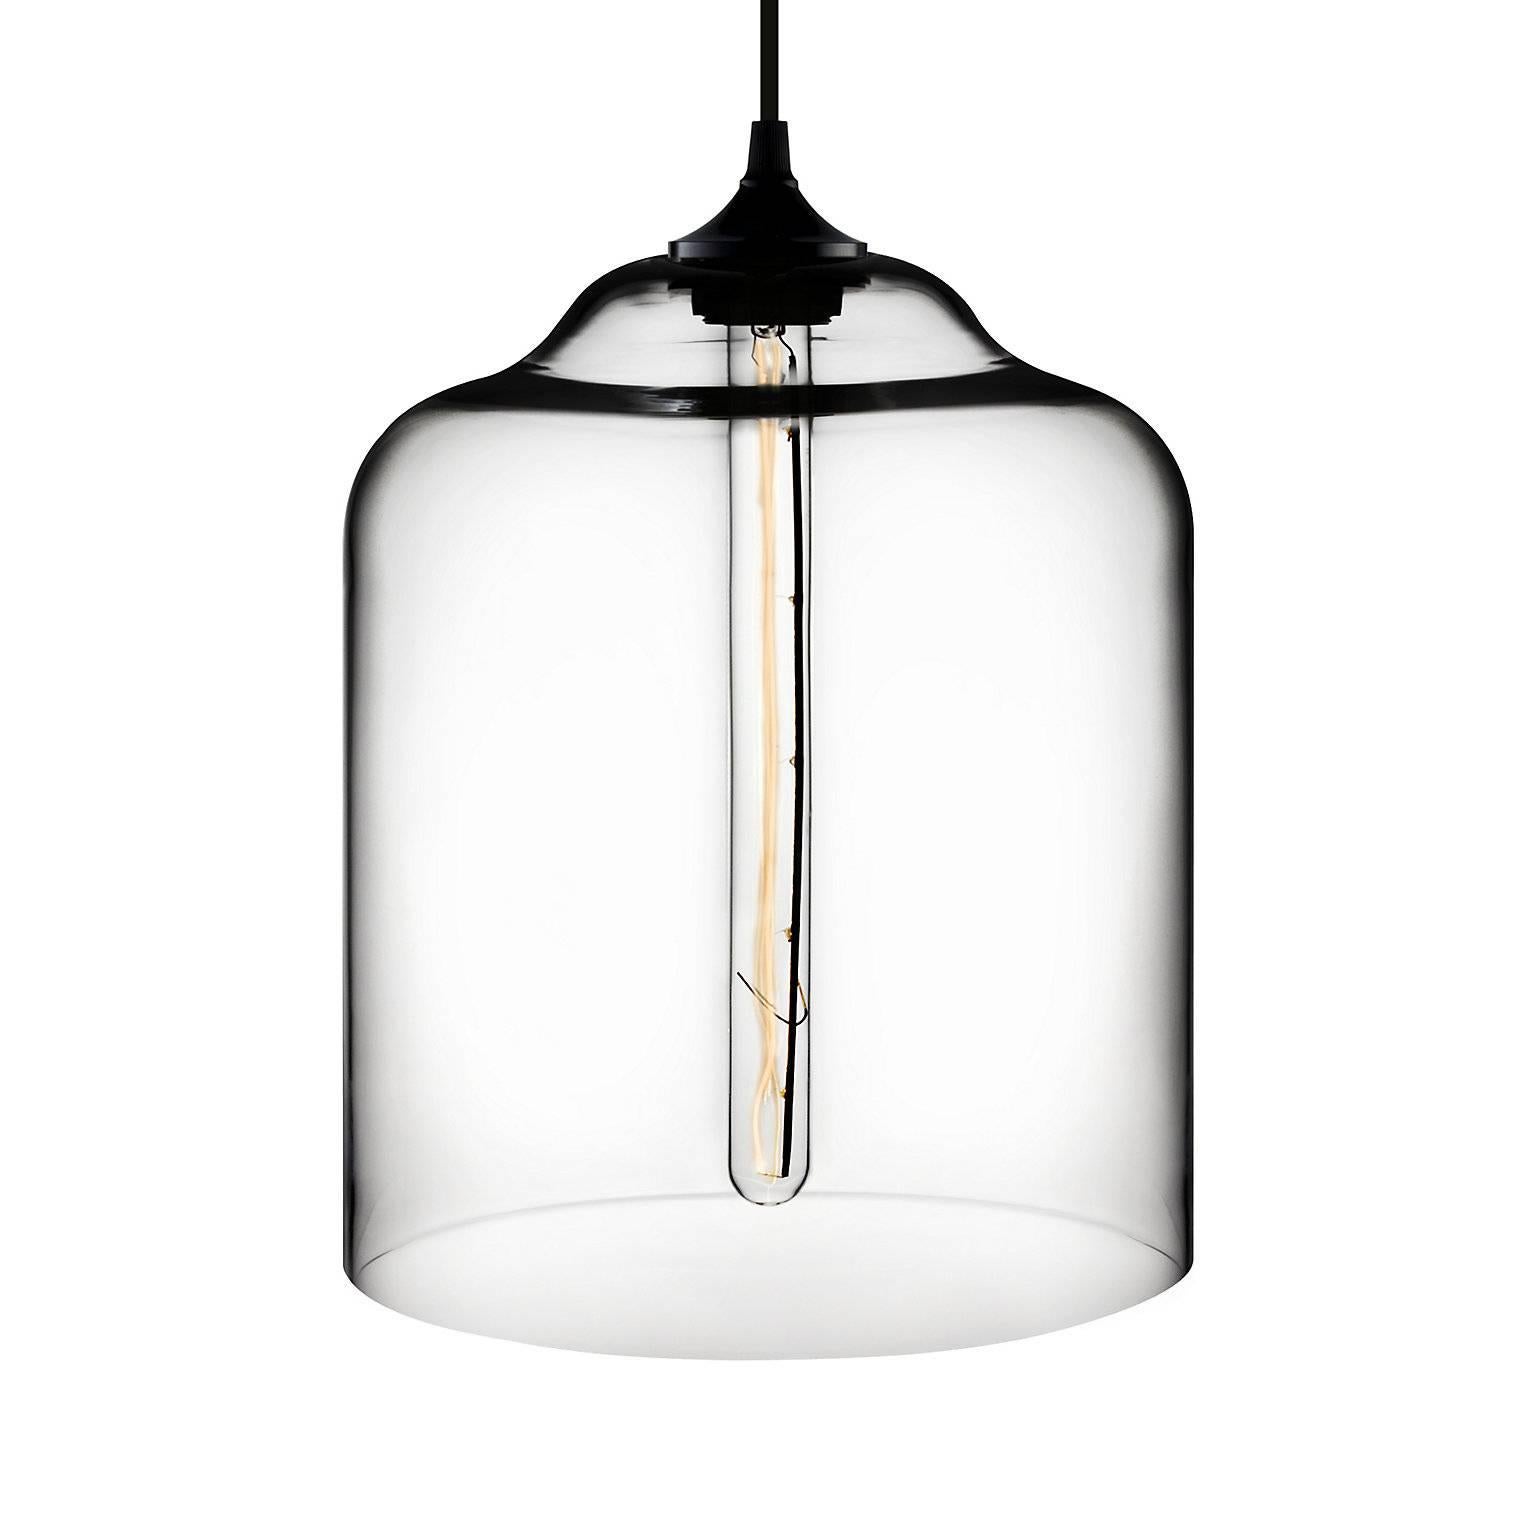 American Bell Jar Plum Handblown Modern Glass Pendant Light, Made in the USA For Sale